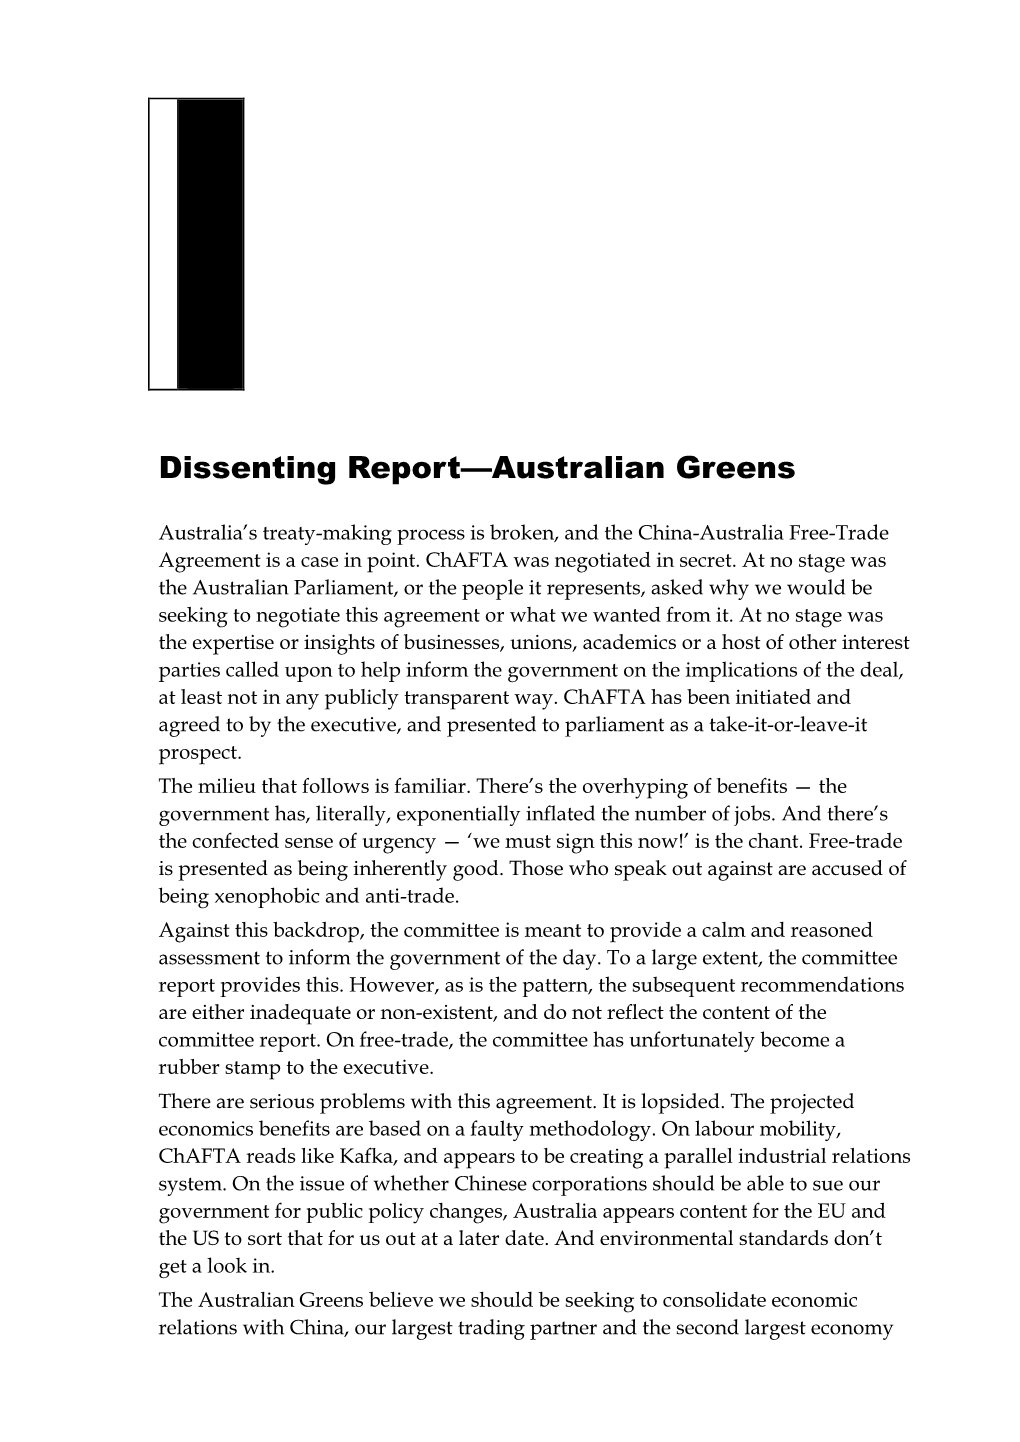 Dissenting Report, Australian Greens